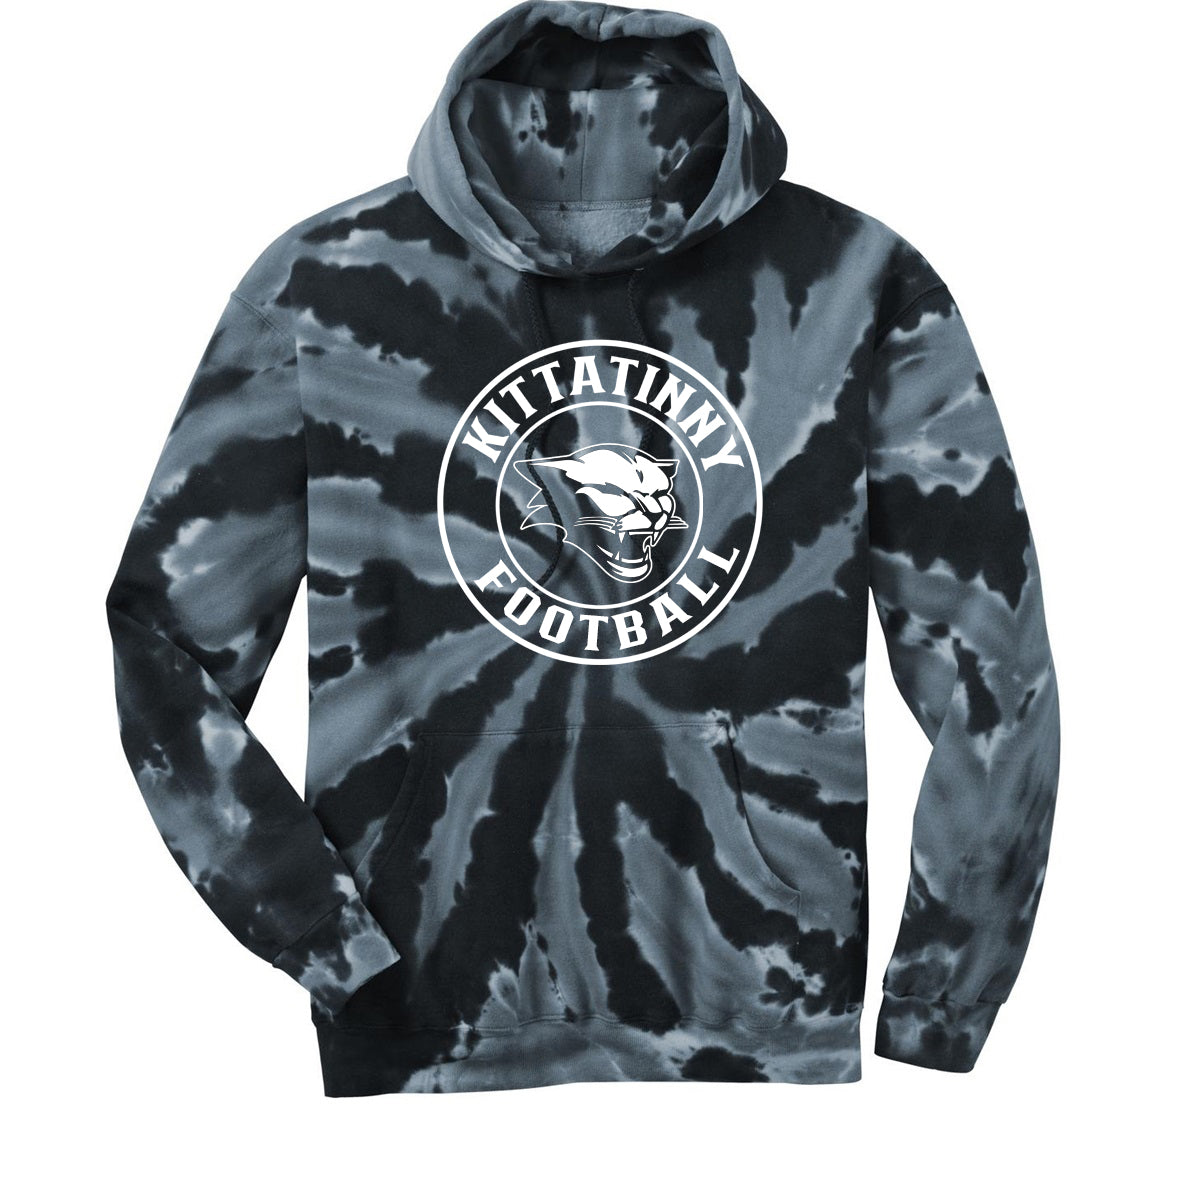 Kittatinny Football Tie-Dye Hooded Sweatshirt Design 5